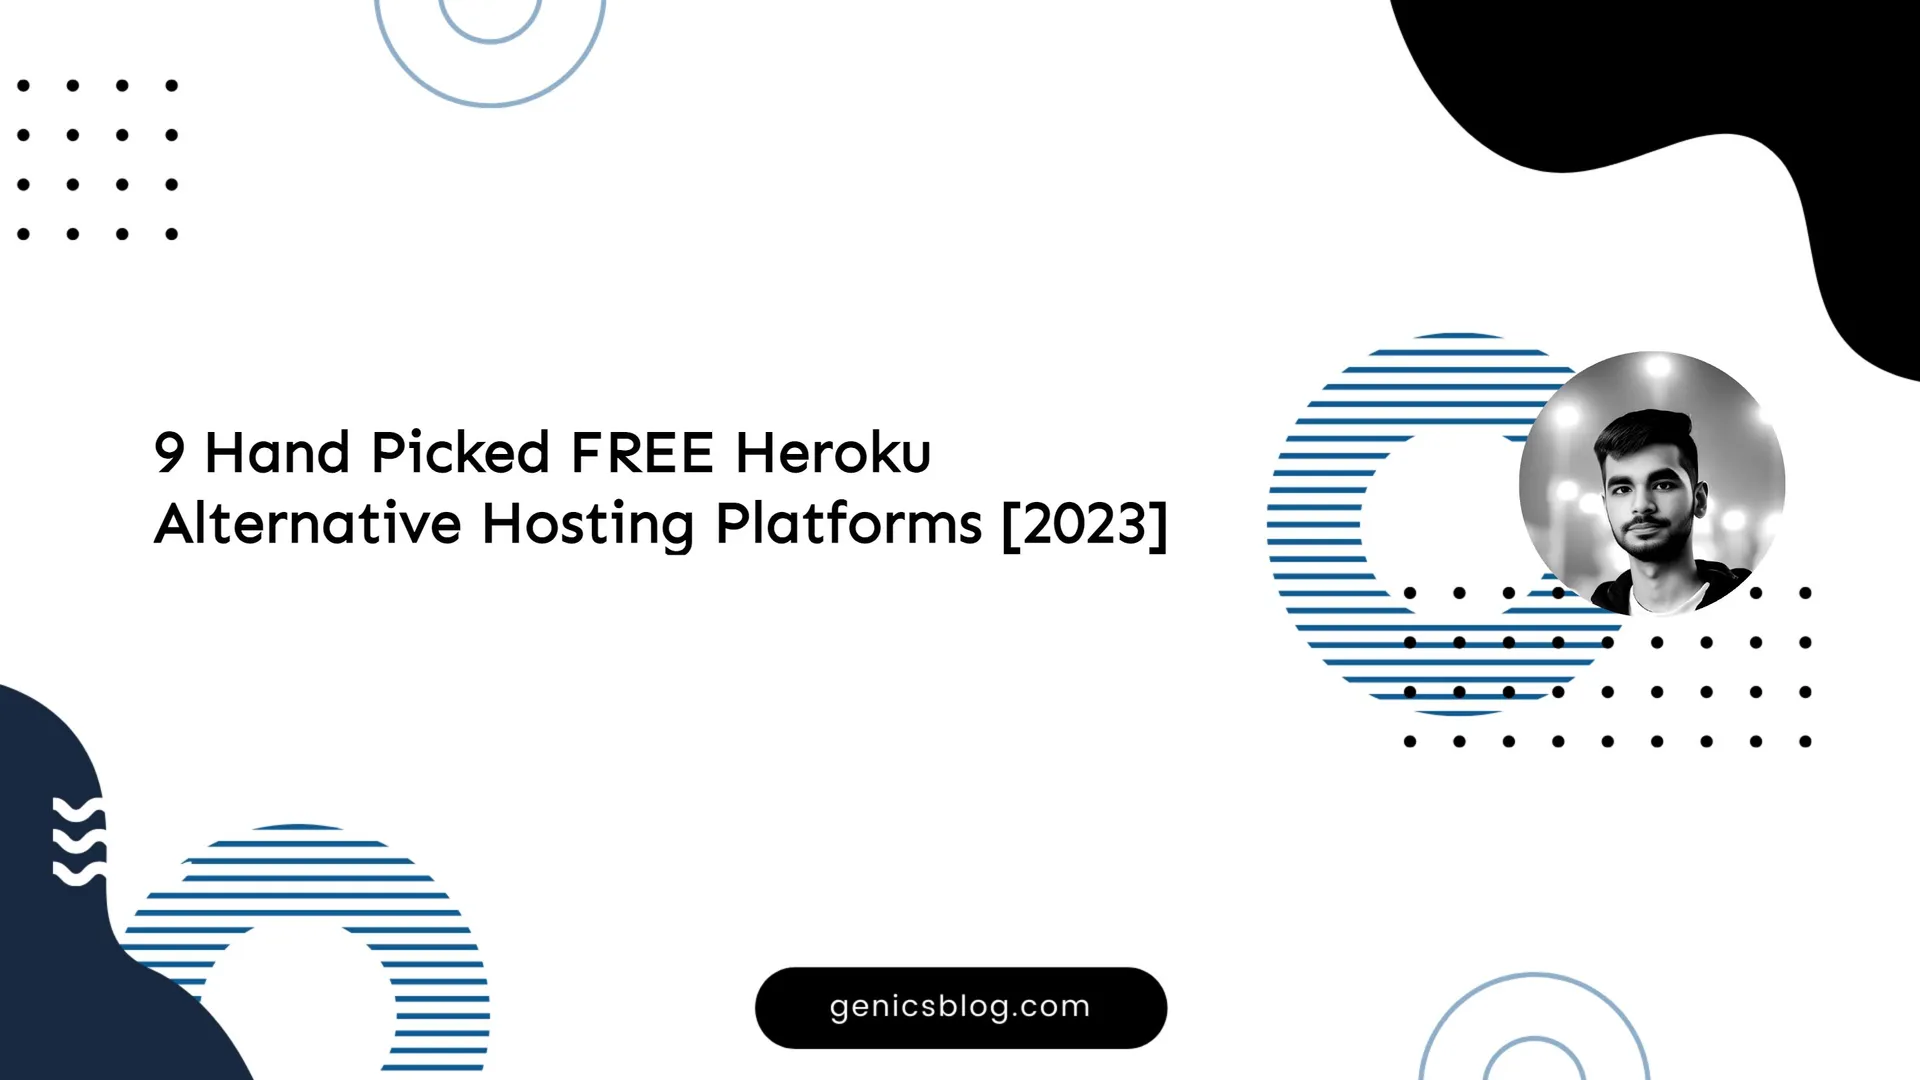 9 Hand Picked FREE Heroku Alternative Hosting Platforms [2023]